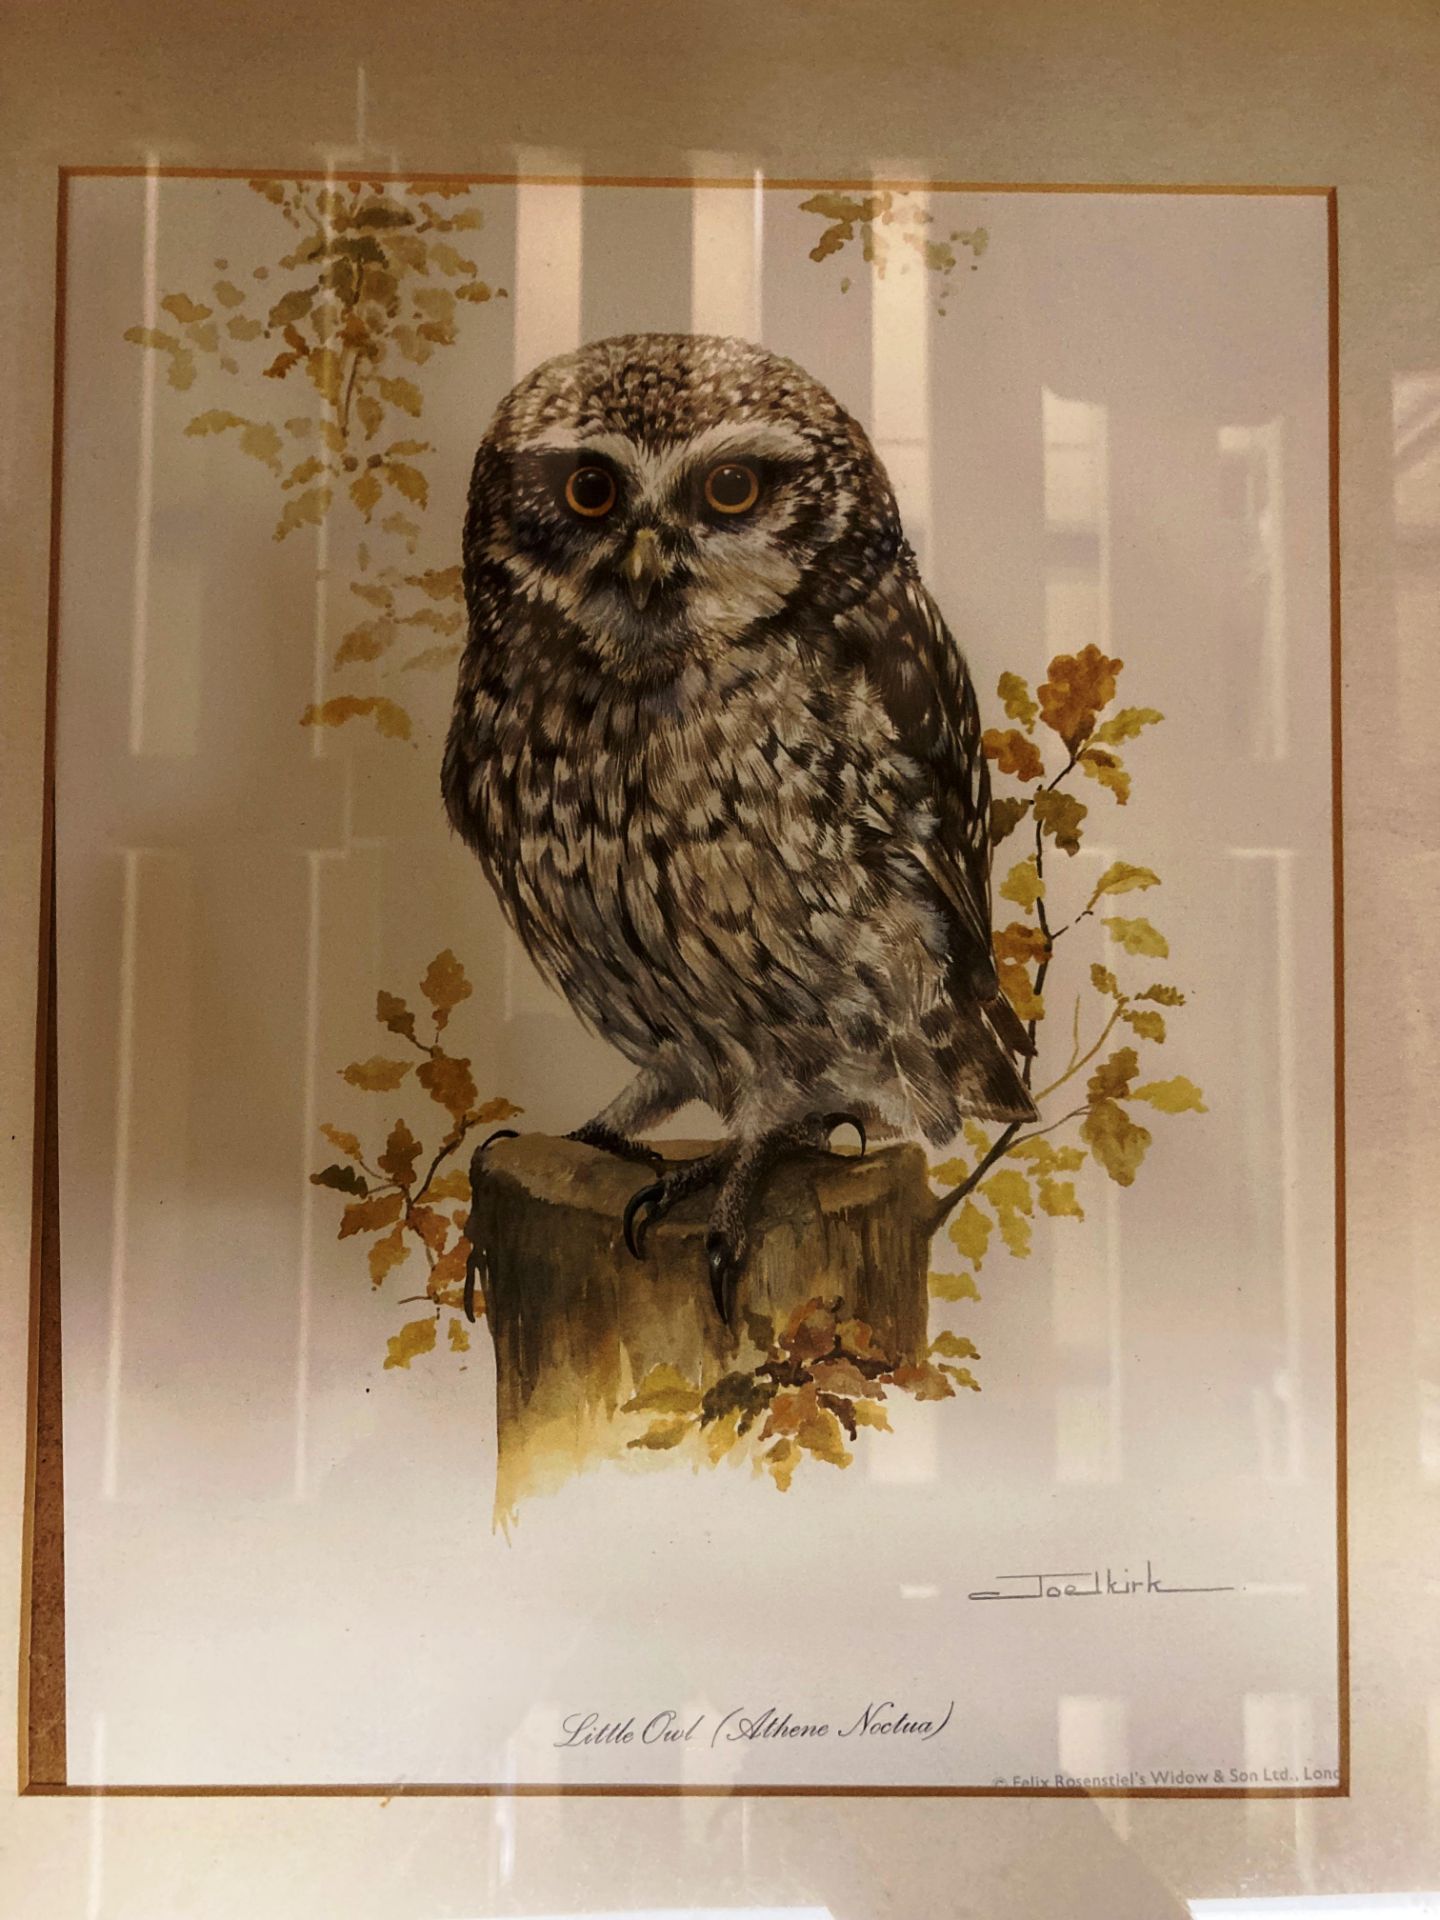 Five assorted owl framed prints by Joel Kirk and Vicki, - Image 3 of 4